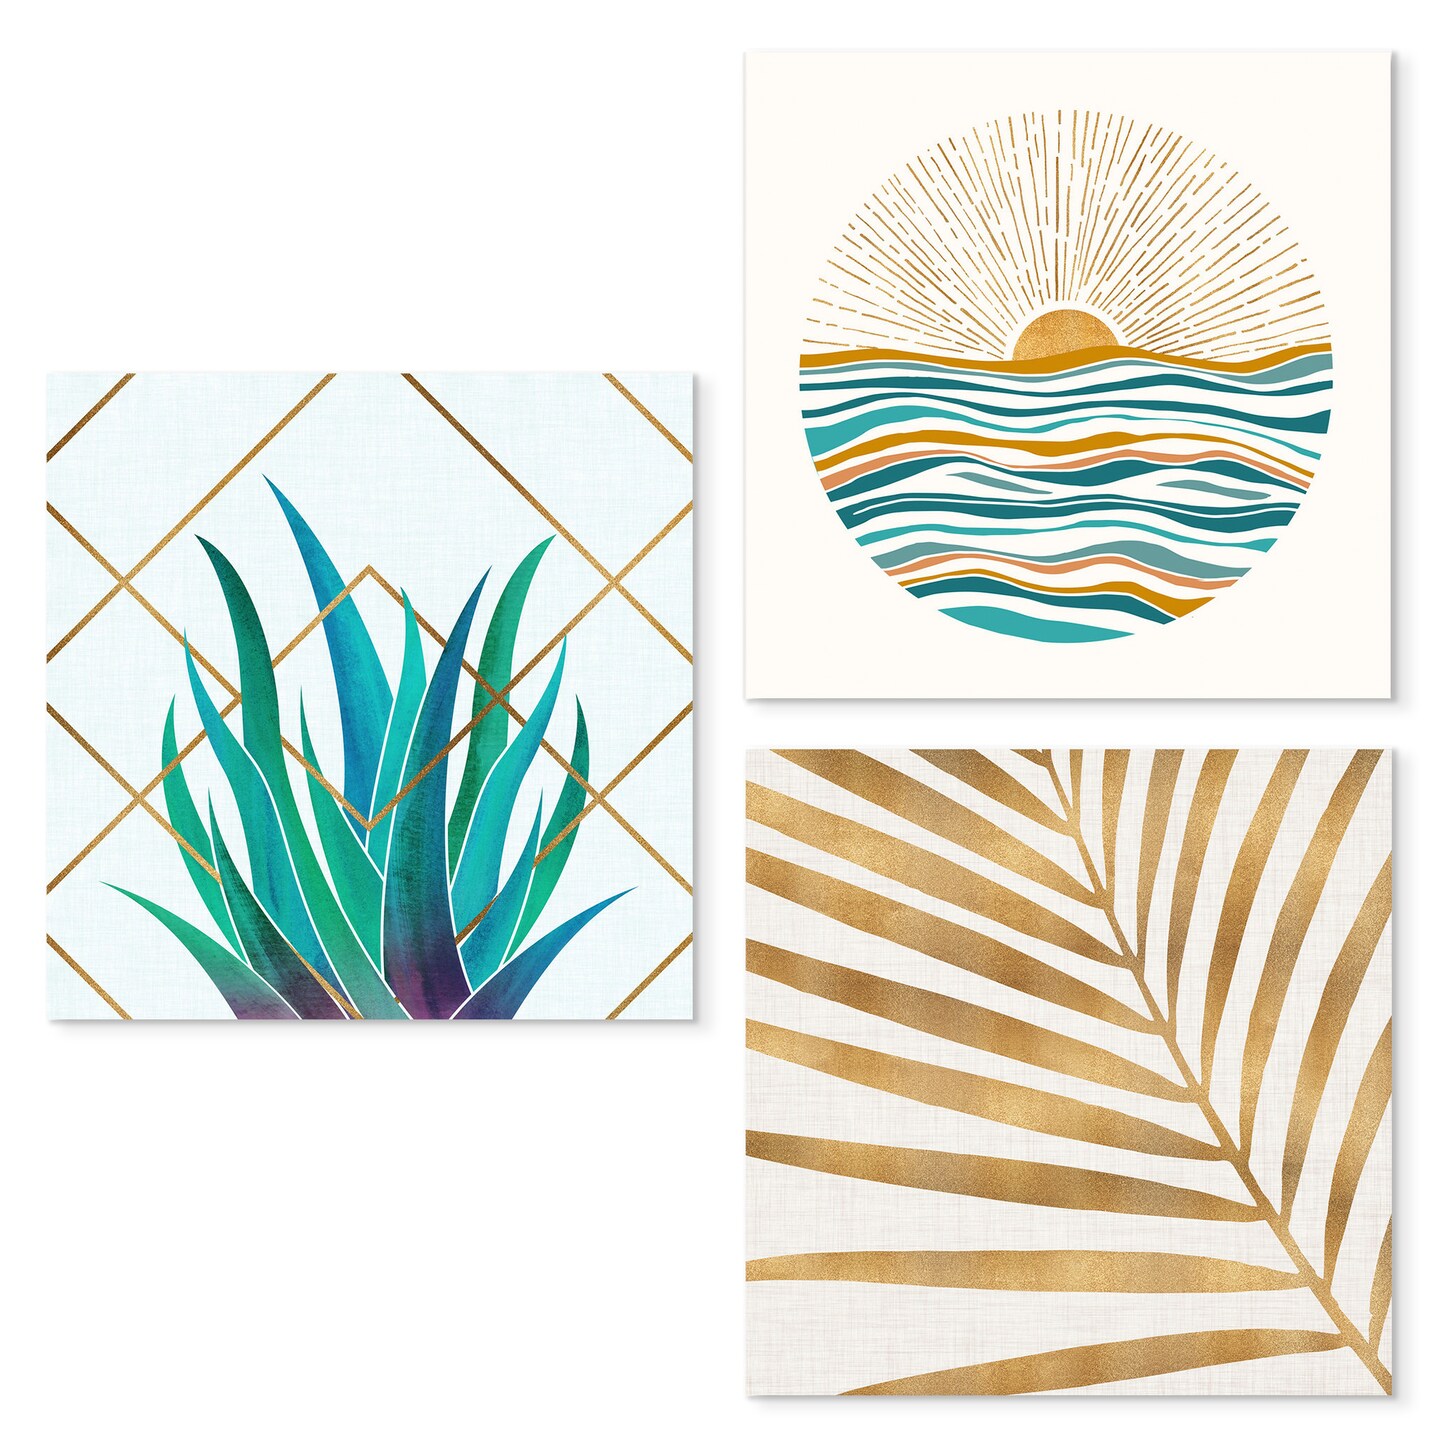 Ocean Fronds By Modern Tropical - 3 Piece Canvas Set